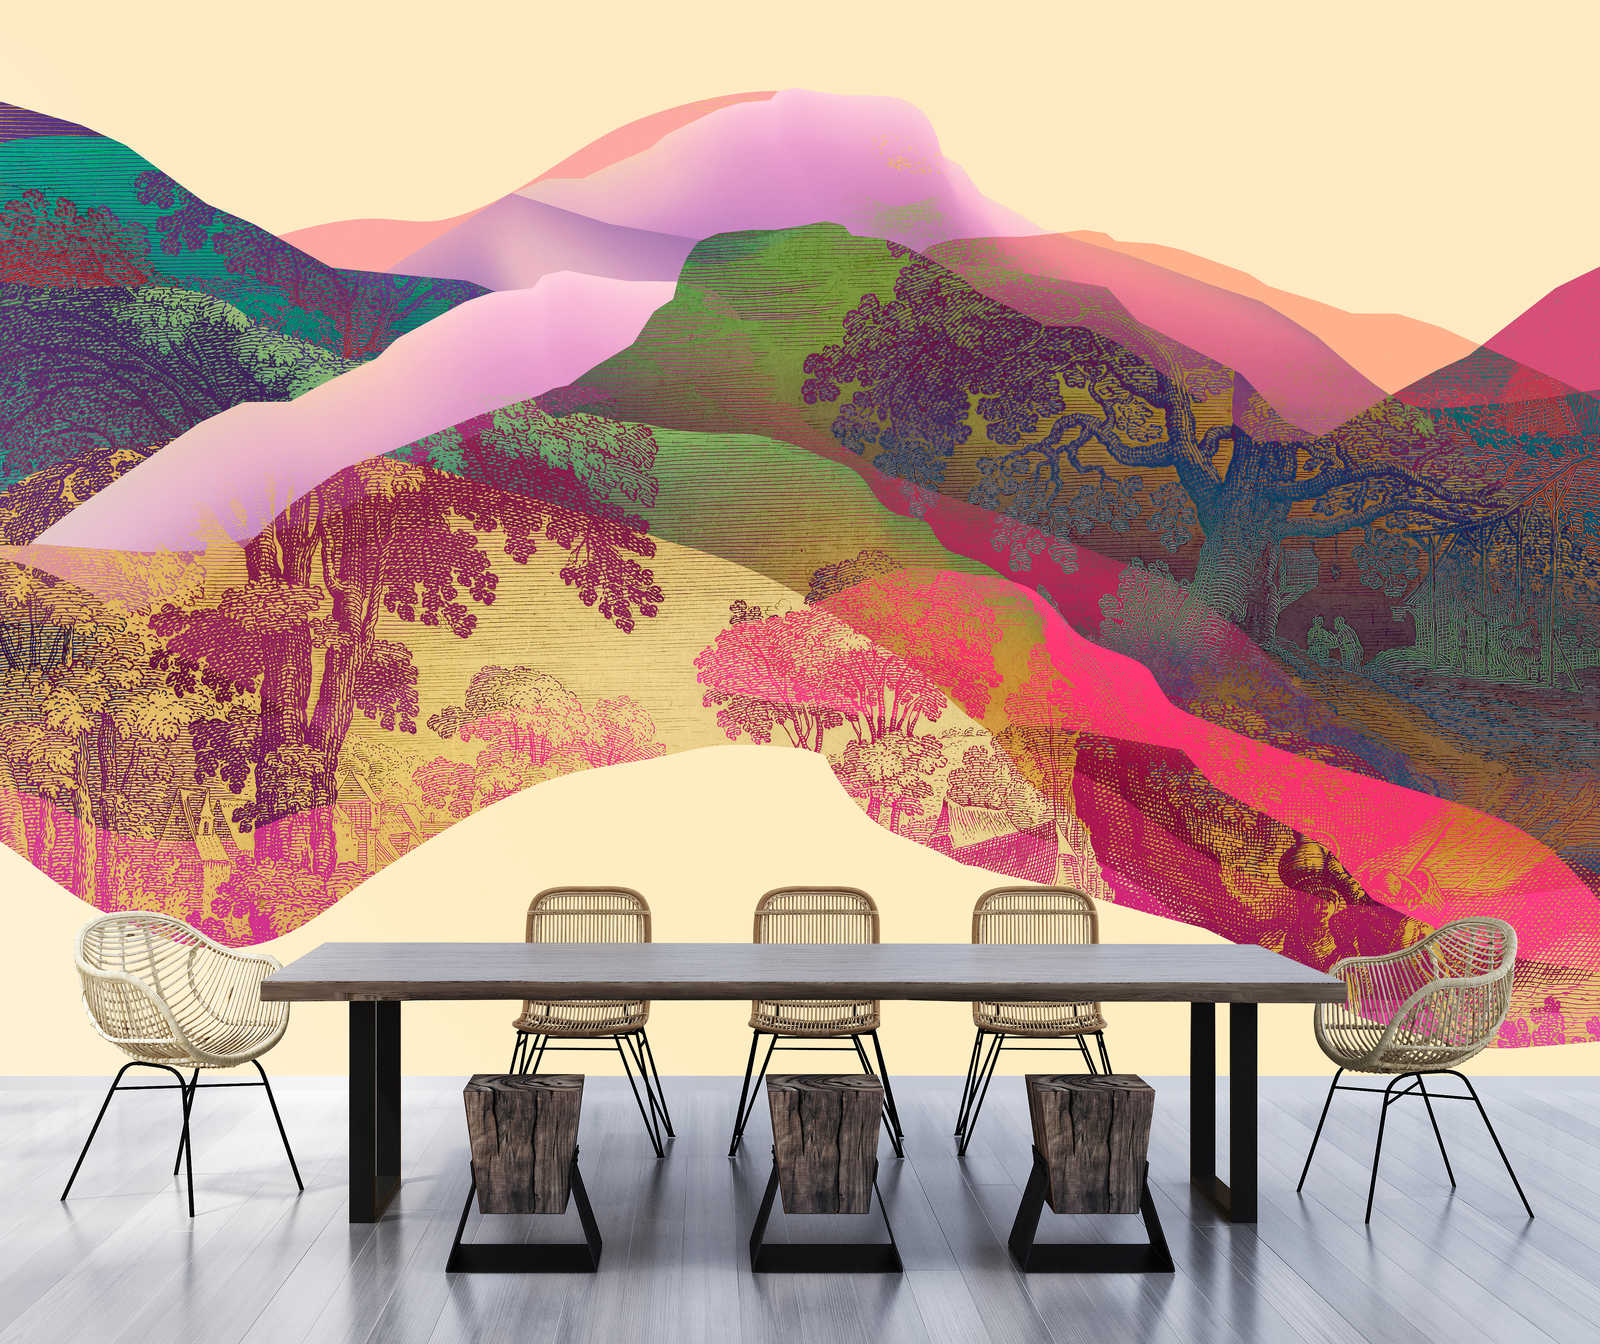             Magic Mountain 2 - mural mountain landscape abstract
        